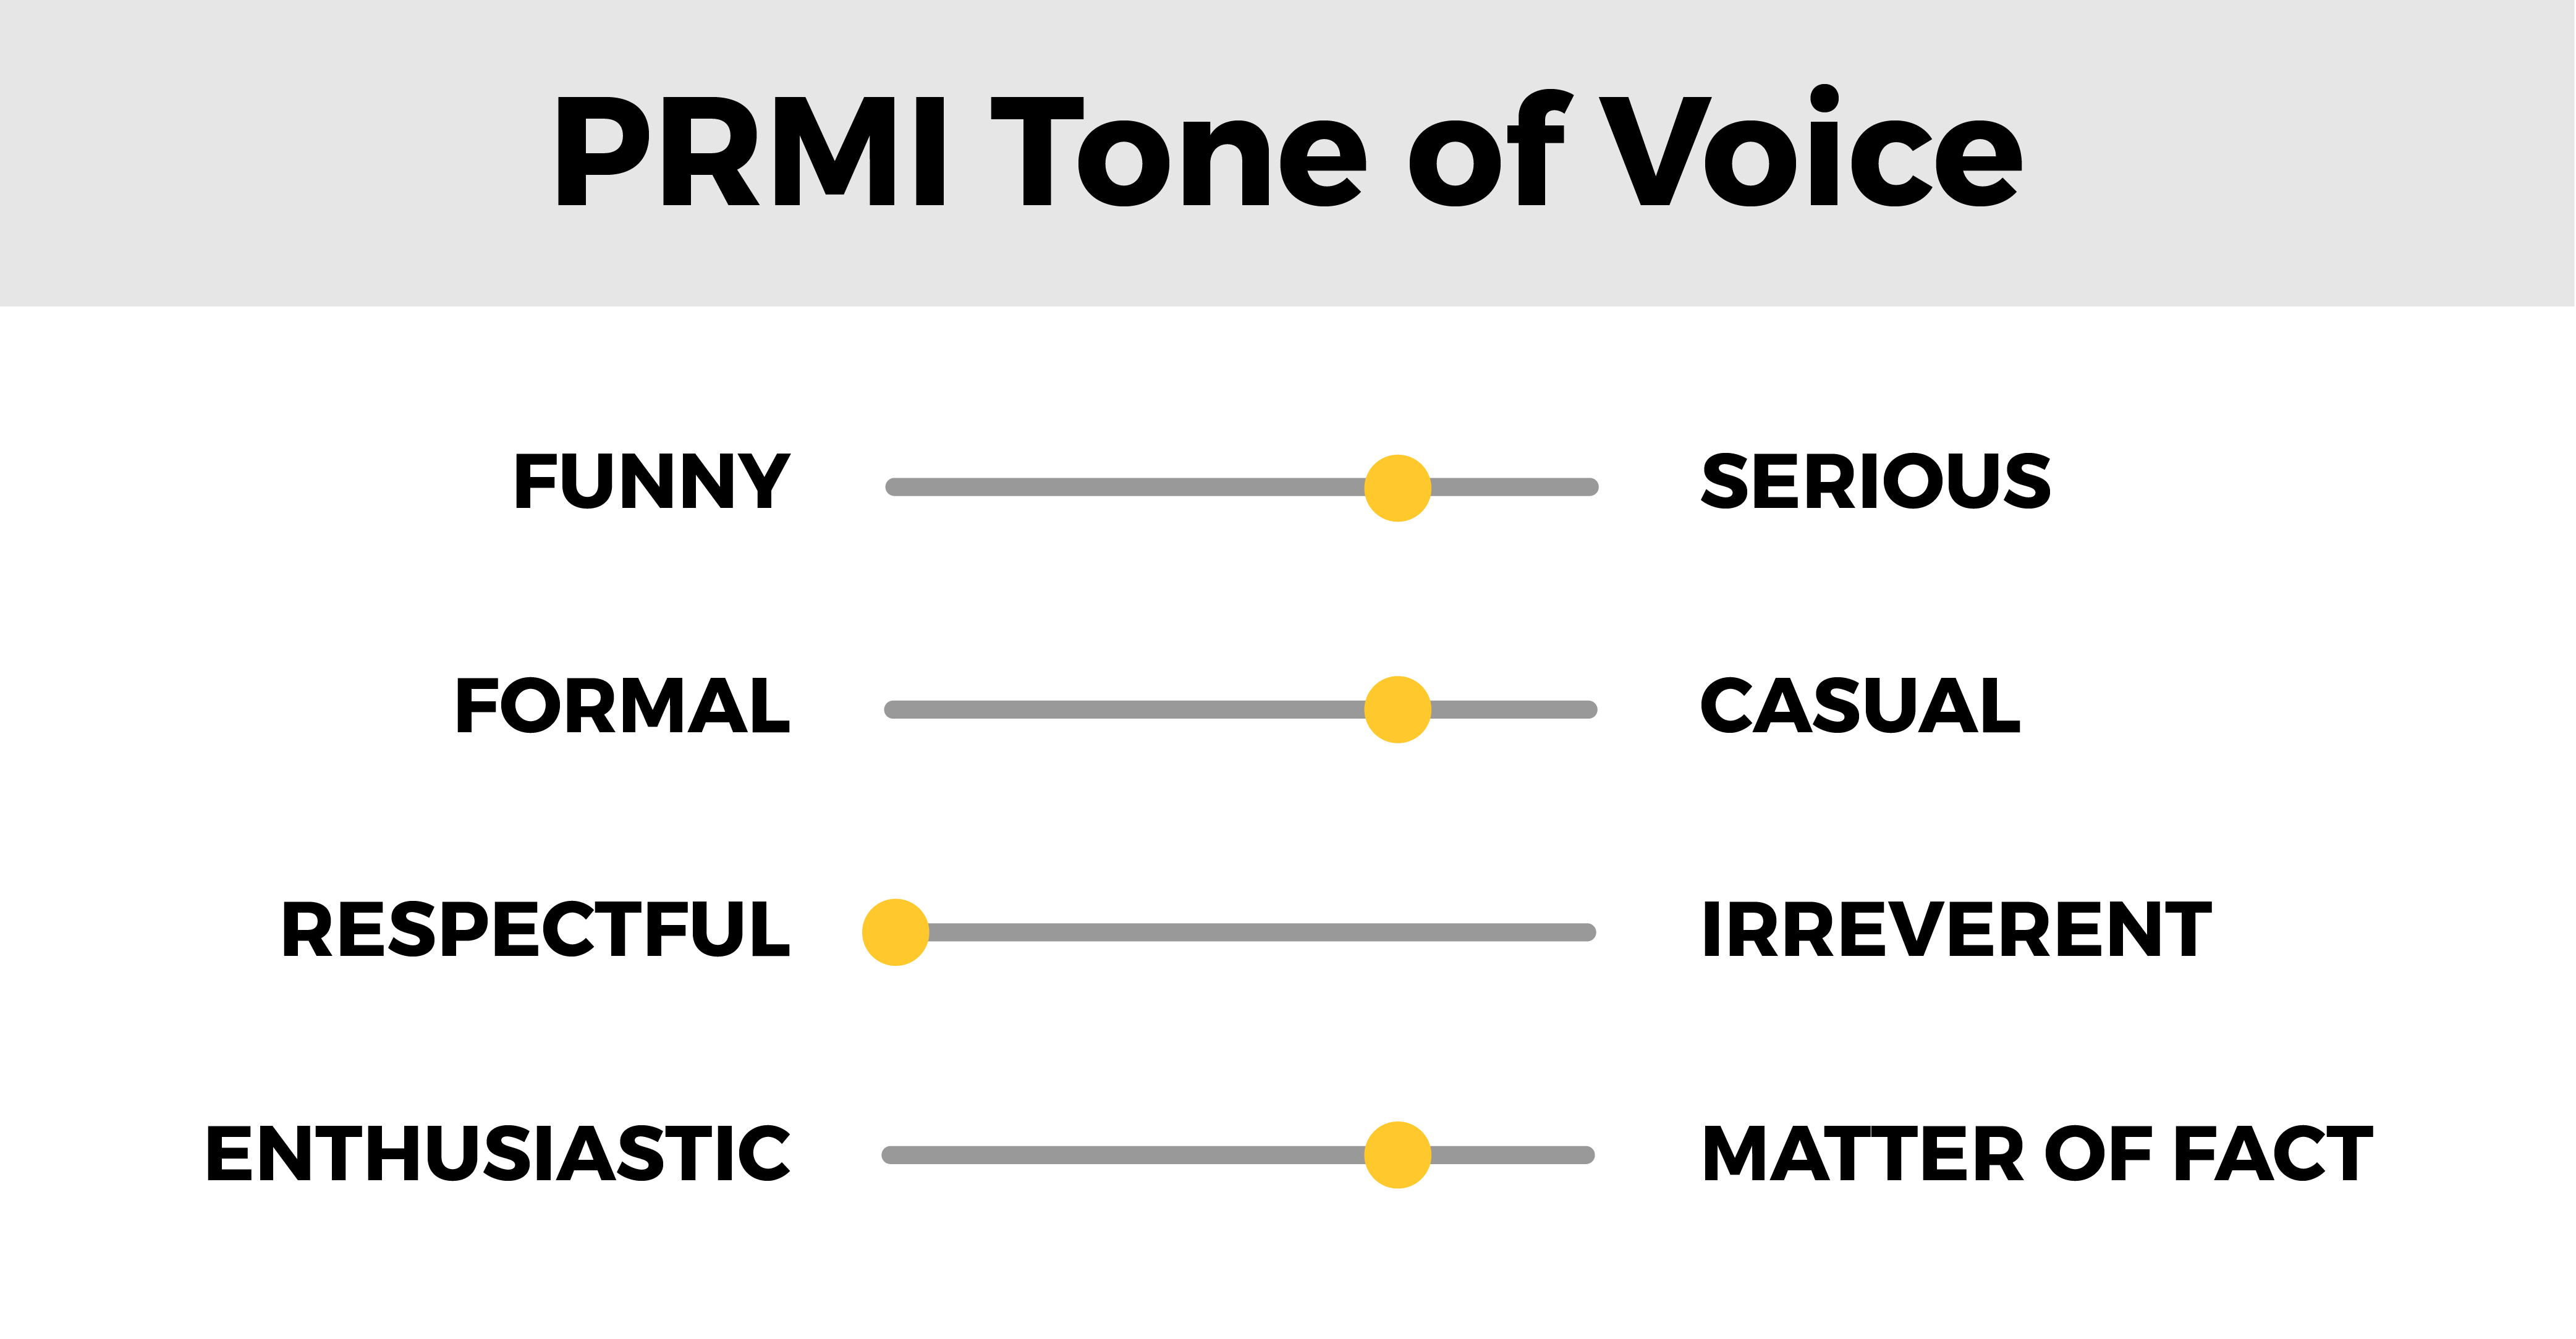 PRMI's Tone of Voice Graphic